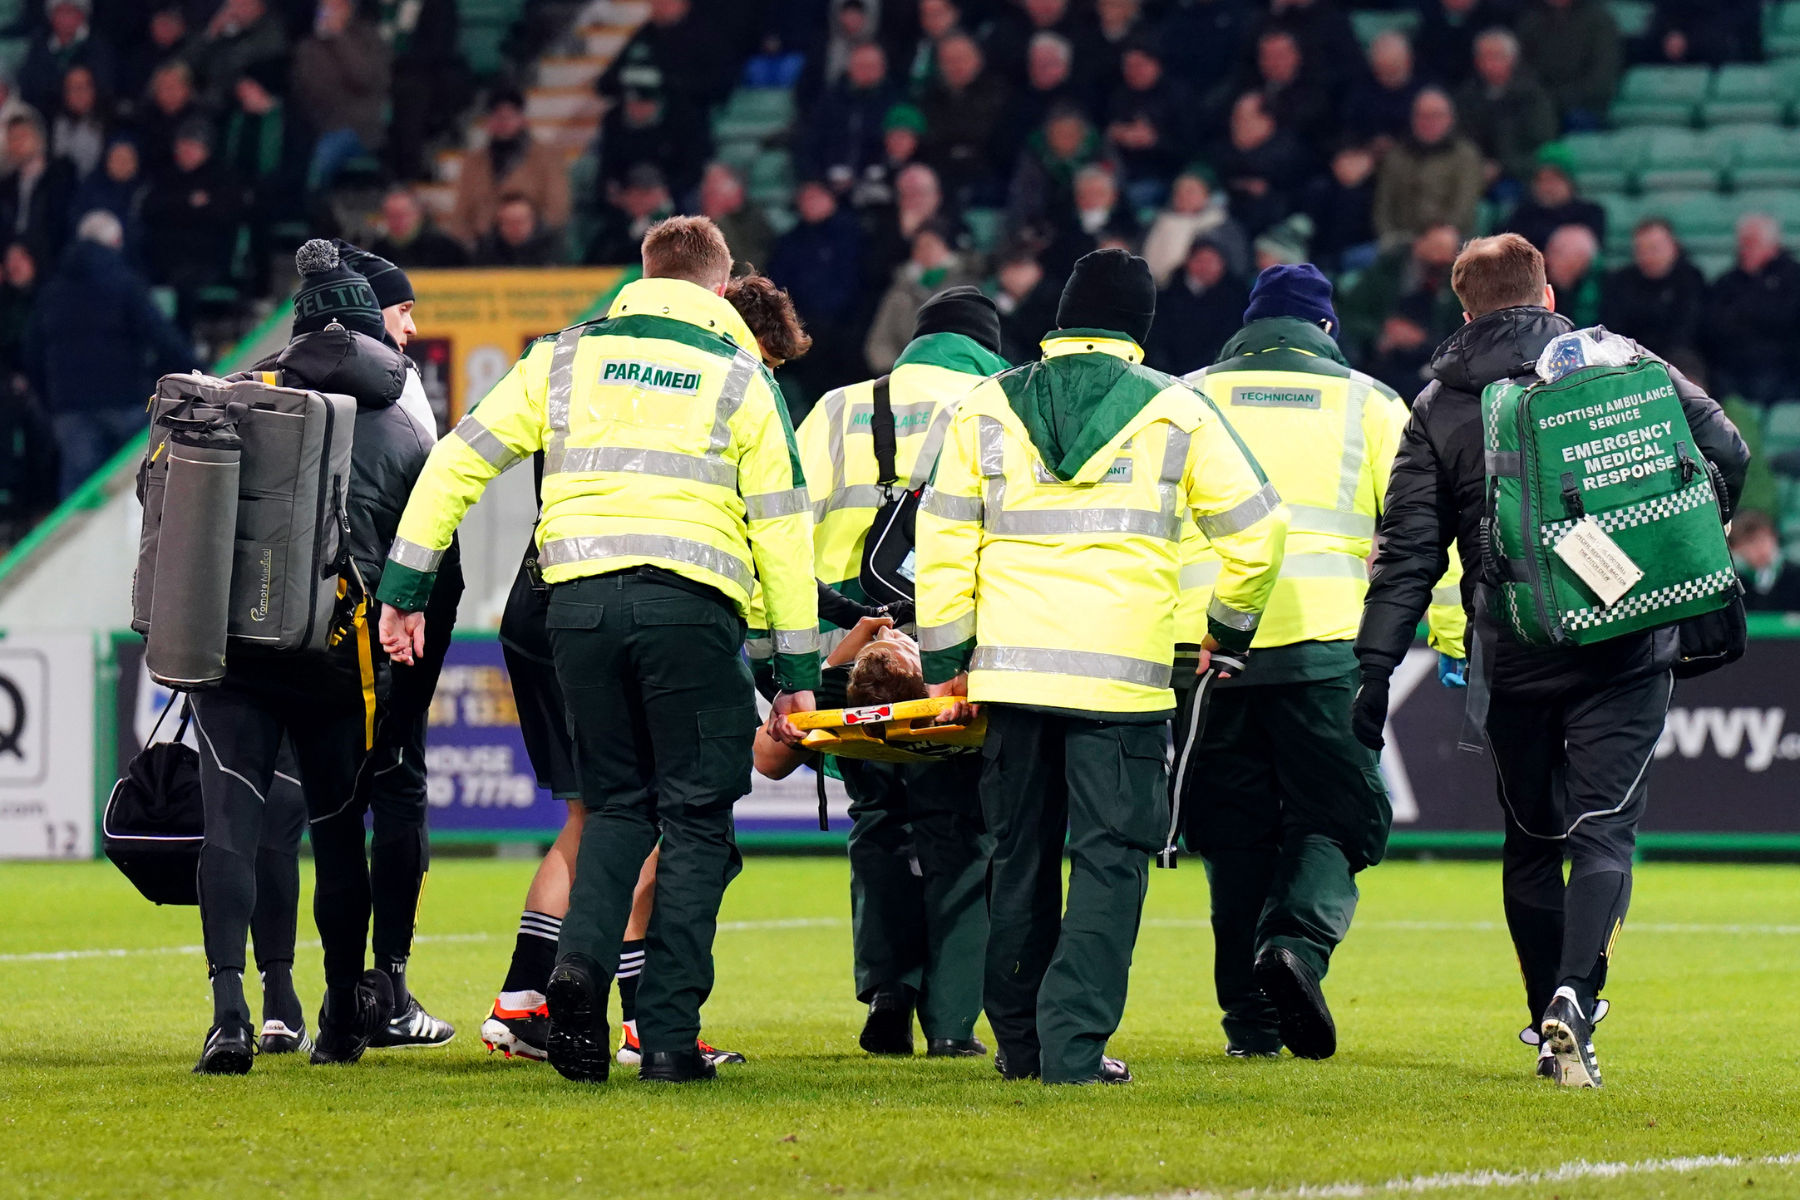 Alistair Johnston Celtic injury latest as defender taken to hospital